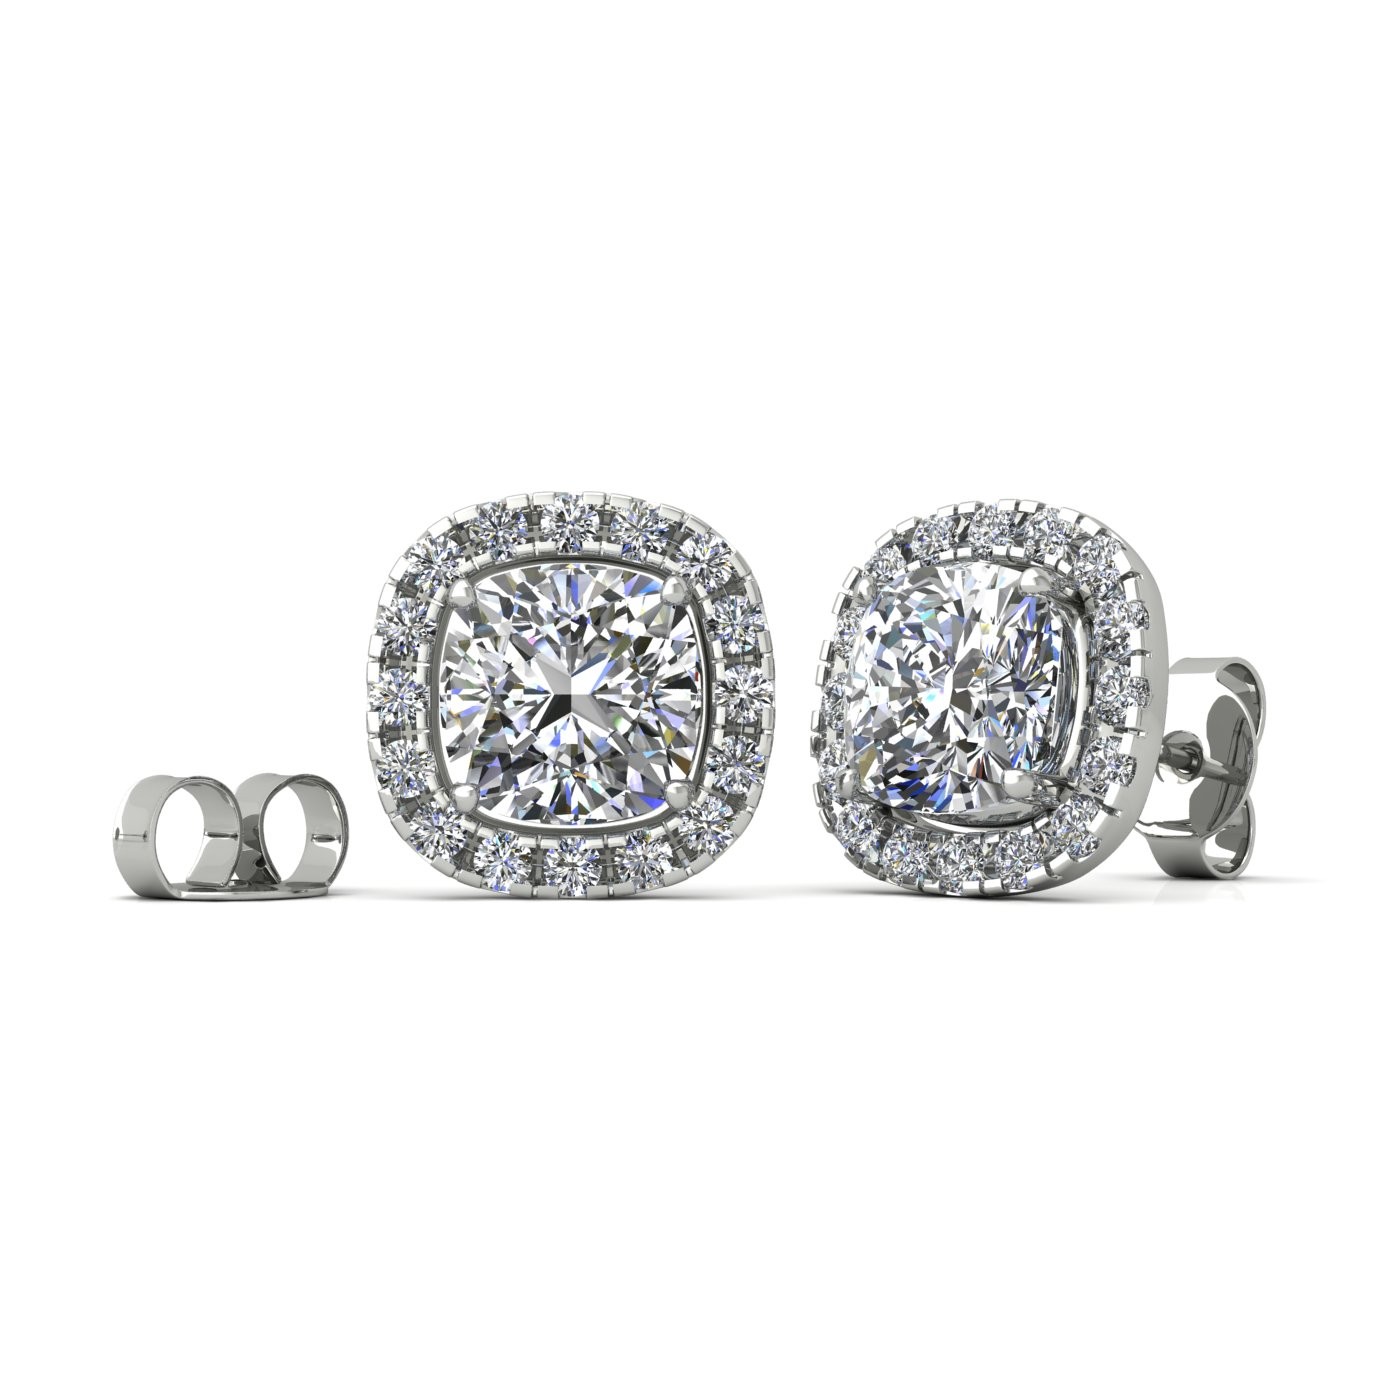 18k white gold  1,5 ct each (3,0 tcw) 4 prongs cushion shape diamond earrings with diamond pavÉ set halo Photos & images